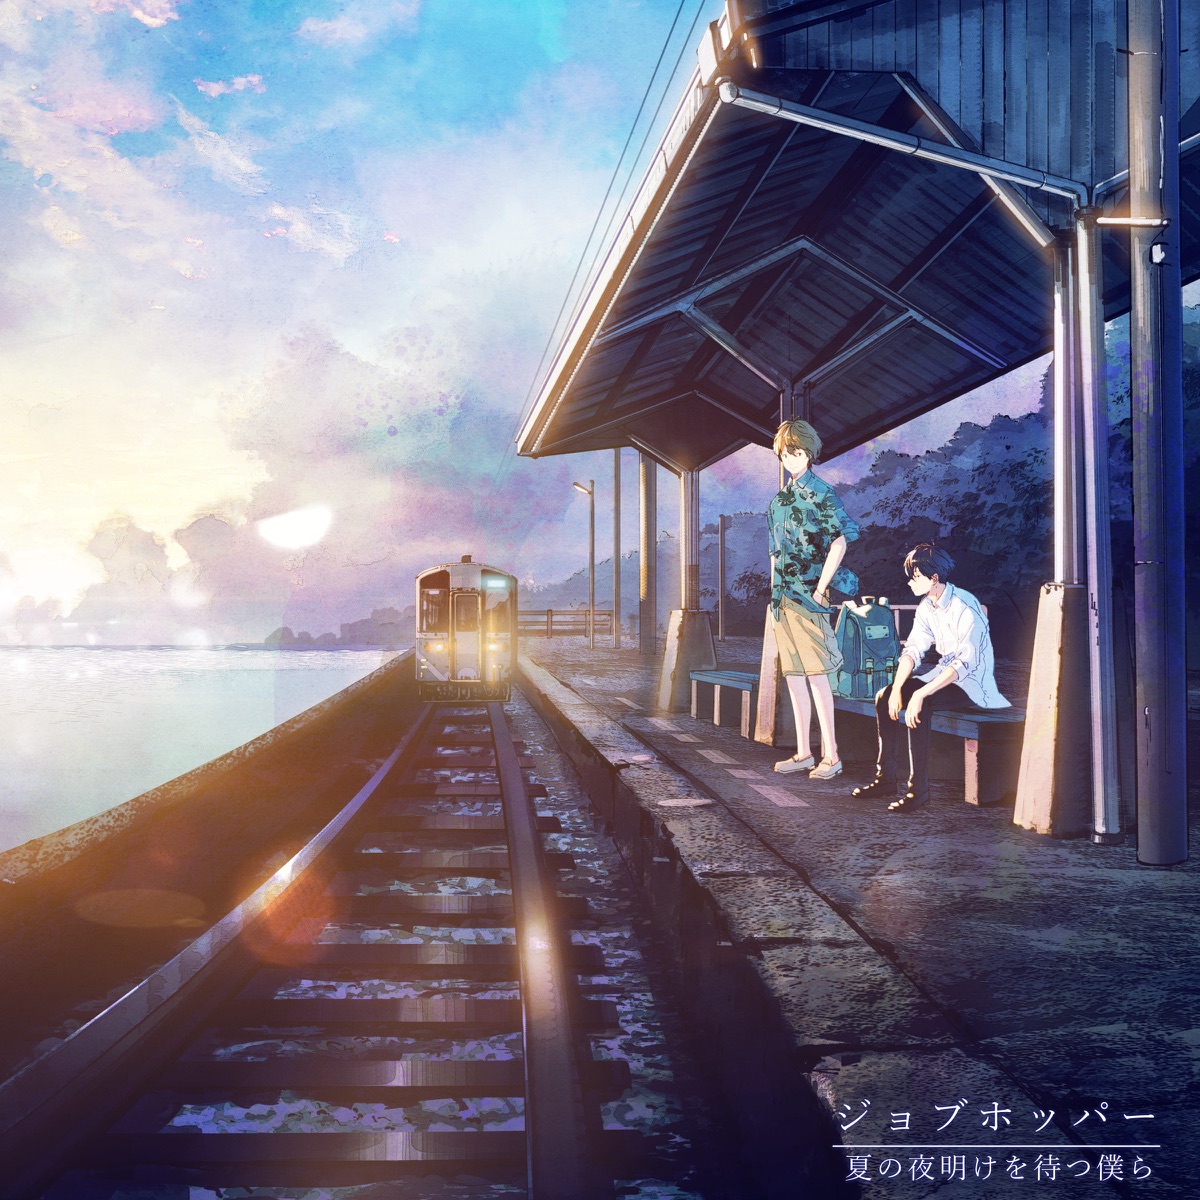 Cover art for『*Luna×Oto Hatsuki - Job Hopper feat. Again, NORISTRY』from the release『Job Hopper feat. Again, NORISTRY』